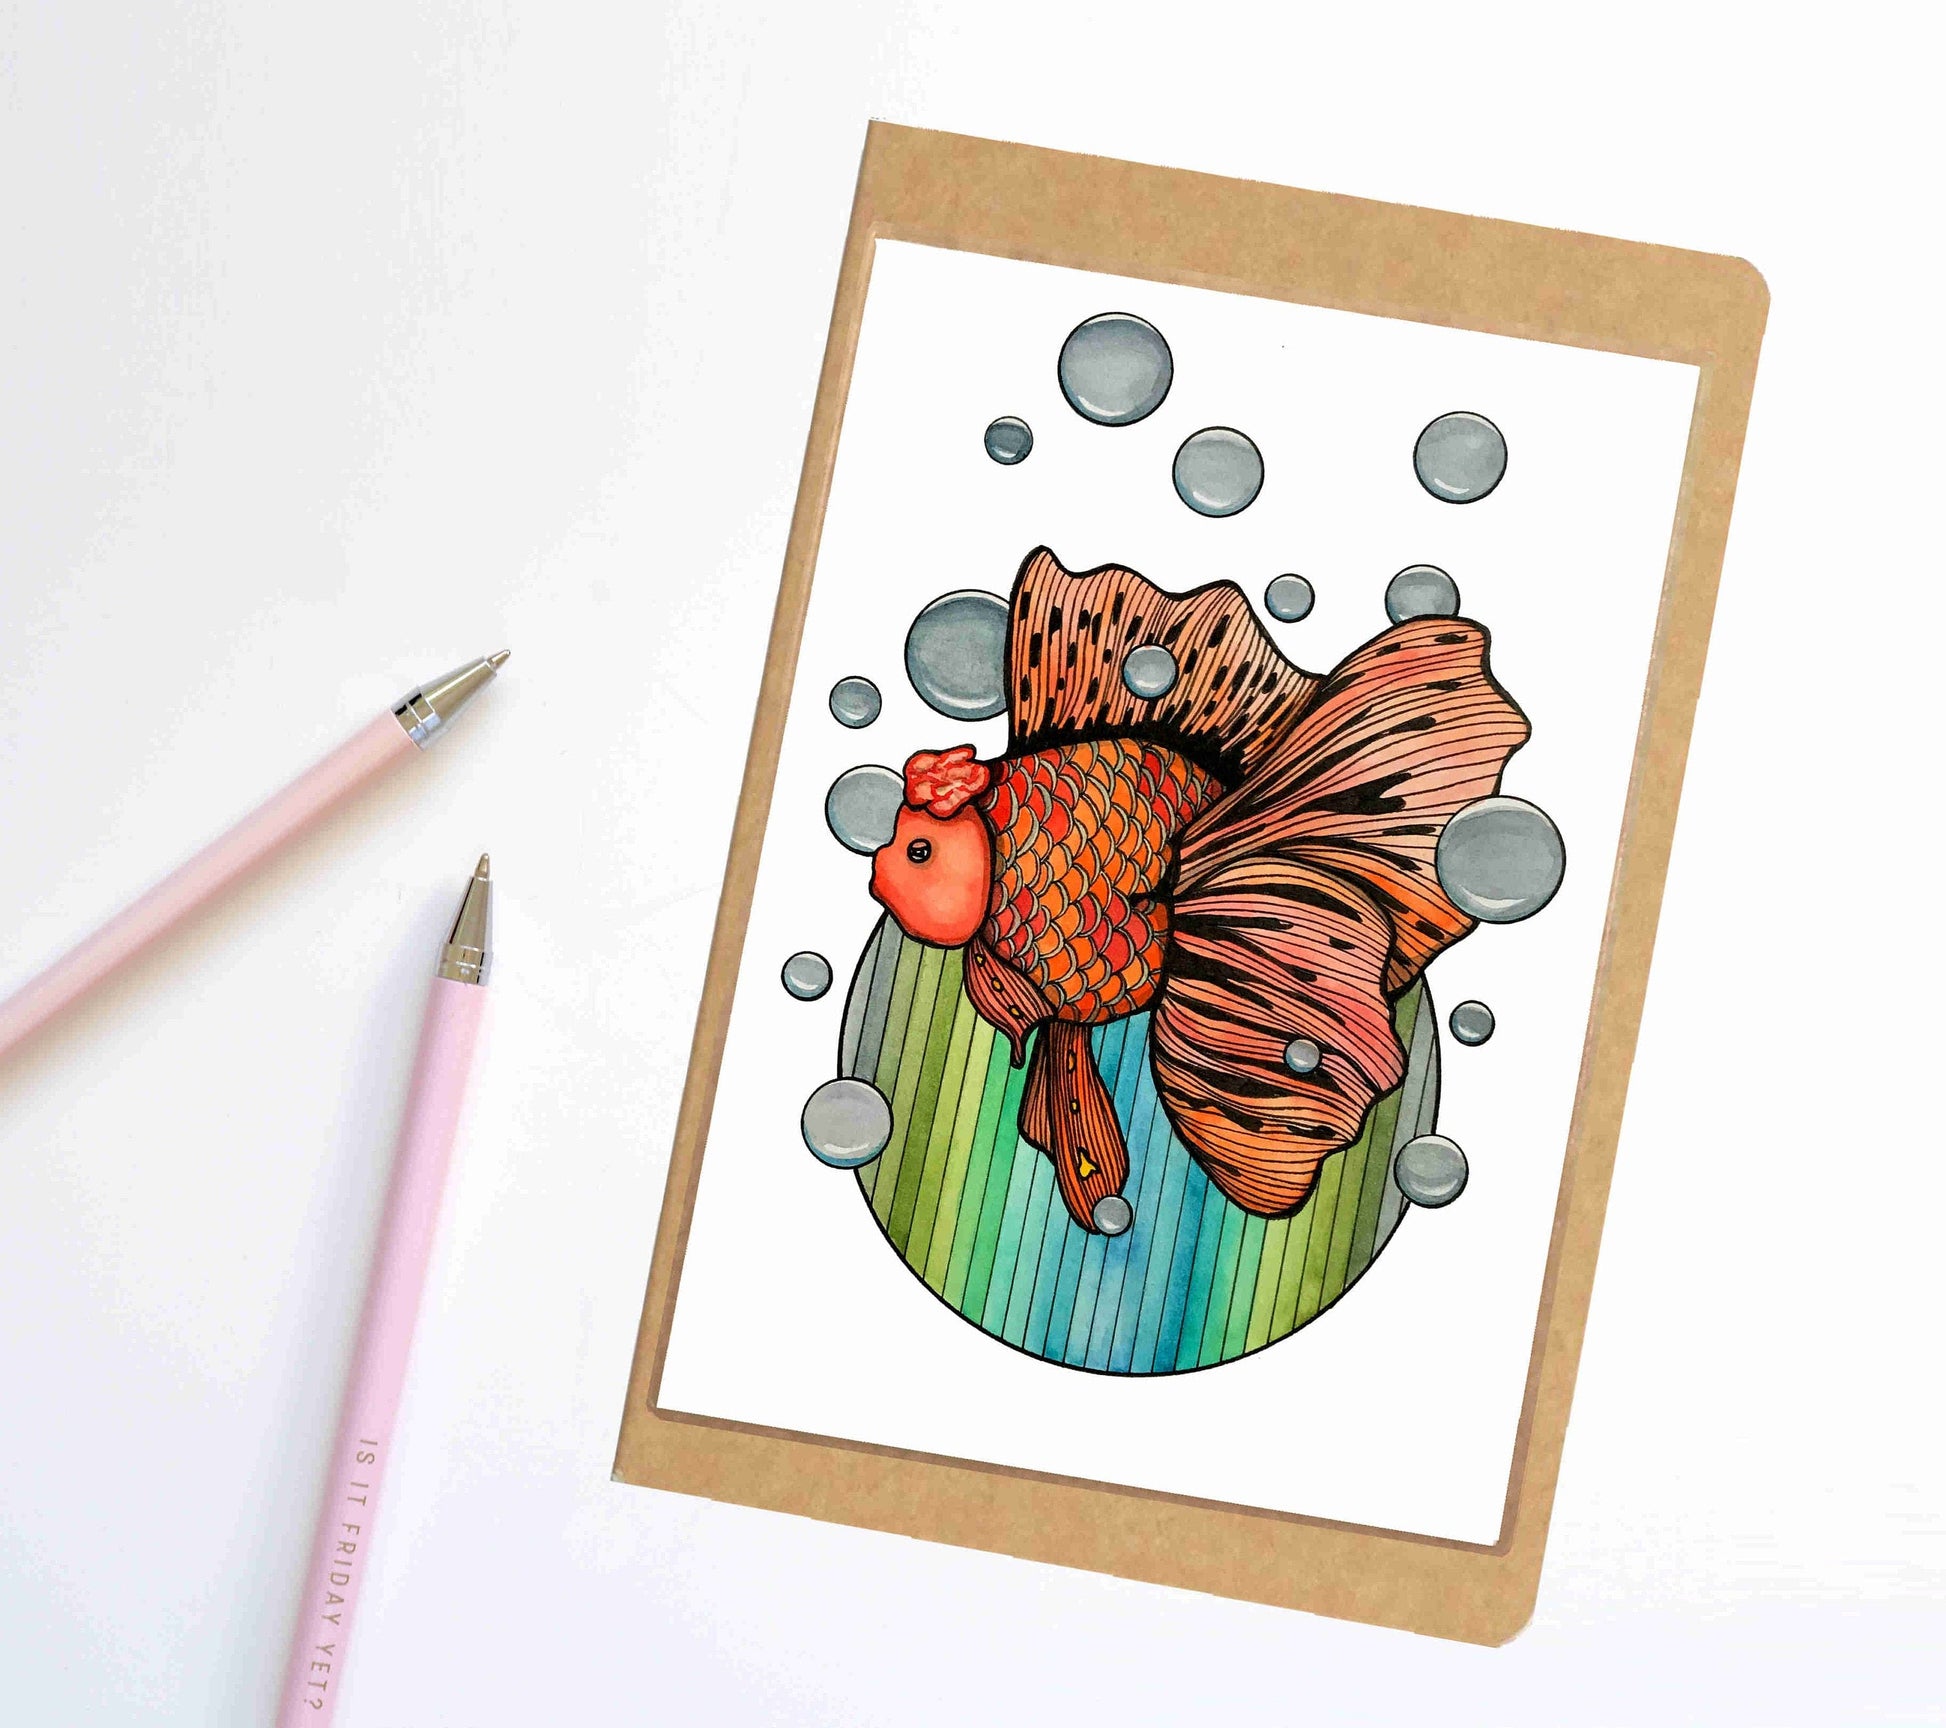 PinkPolish Design Notebook "Bubble Fish" Goldfish Inspired Notebook / Sketchbook / Journal